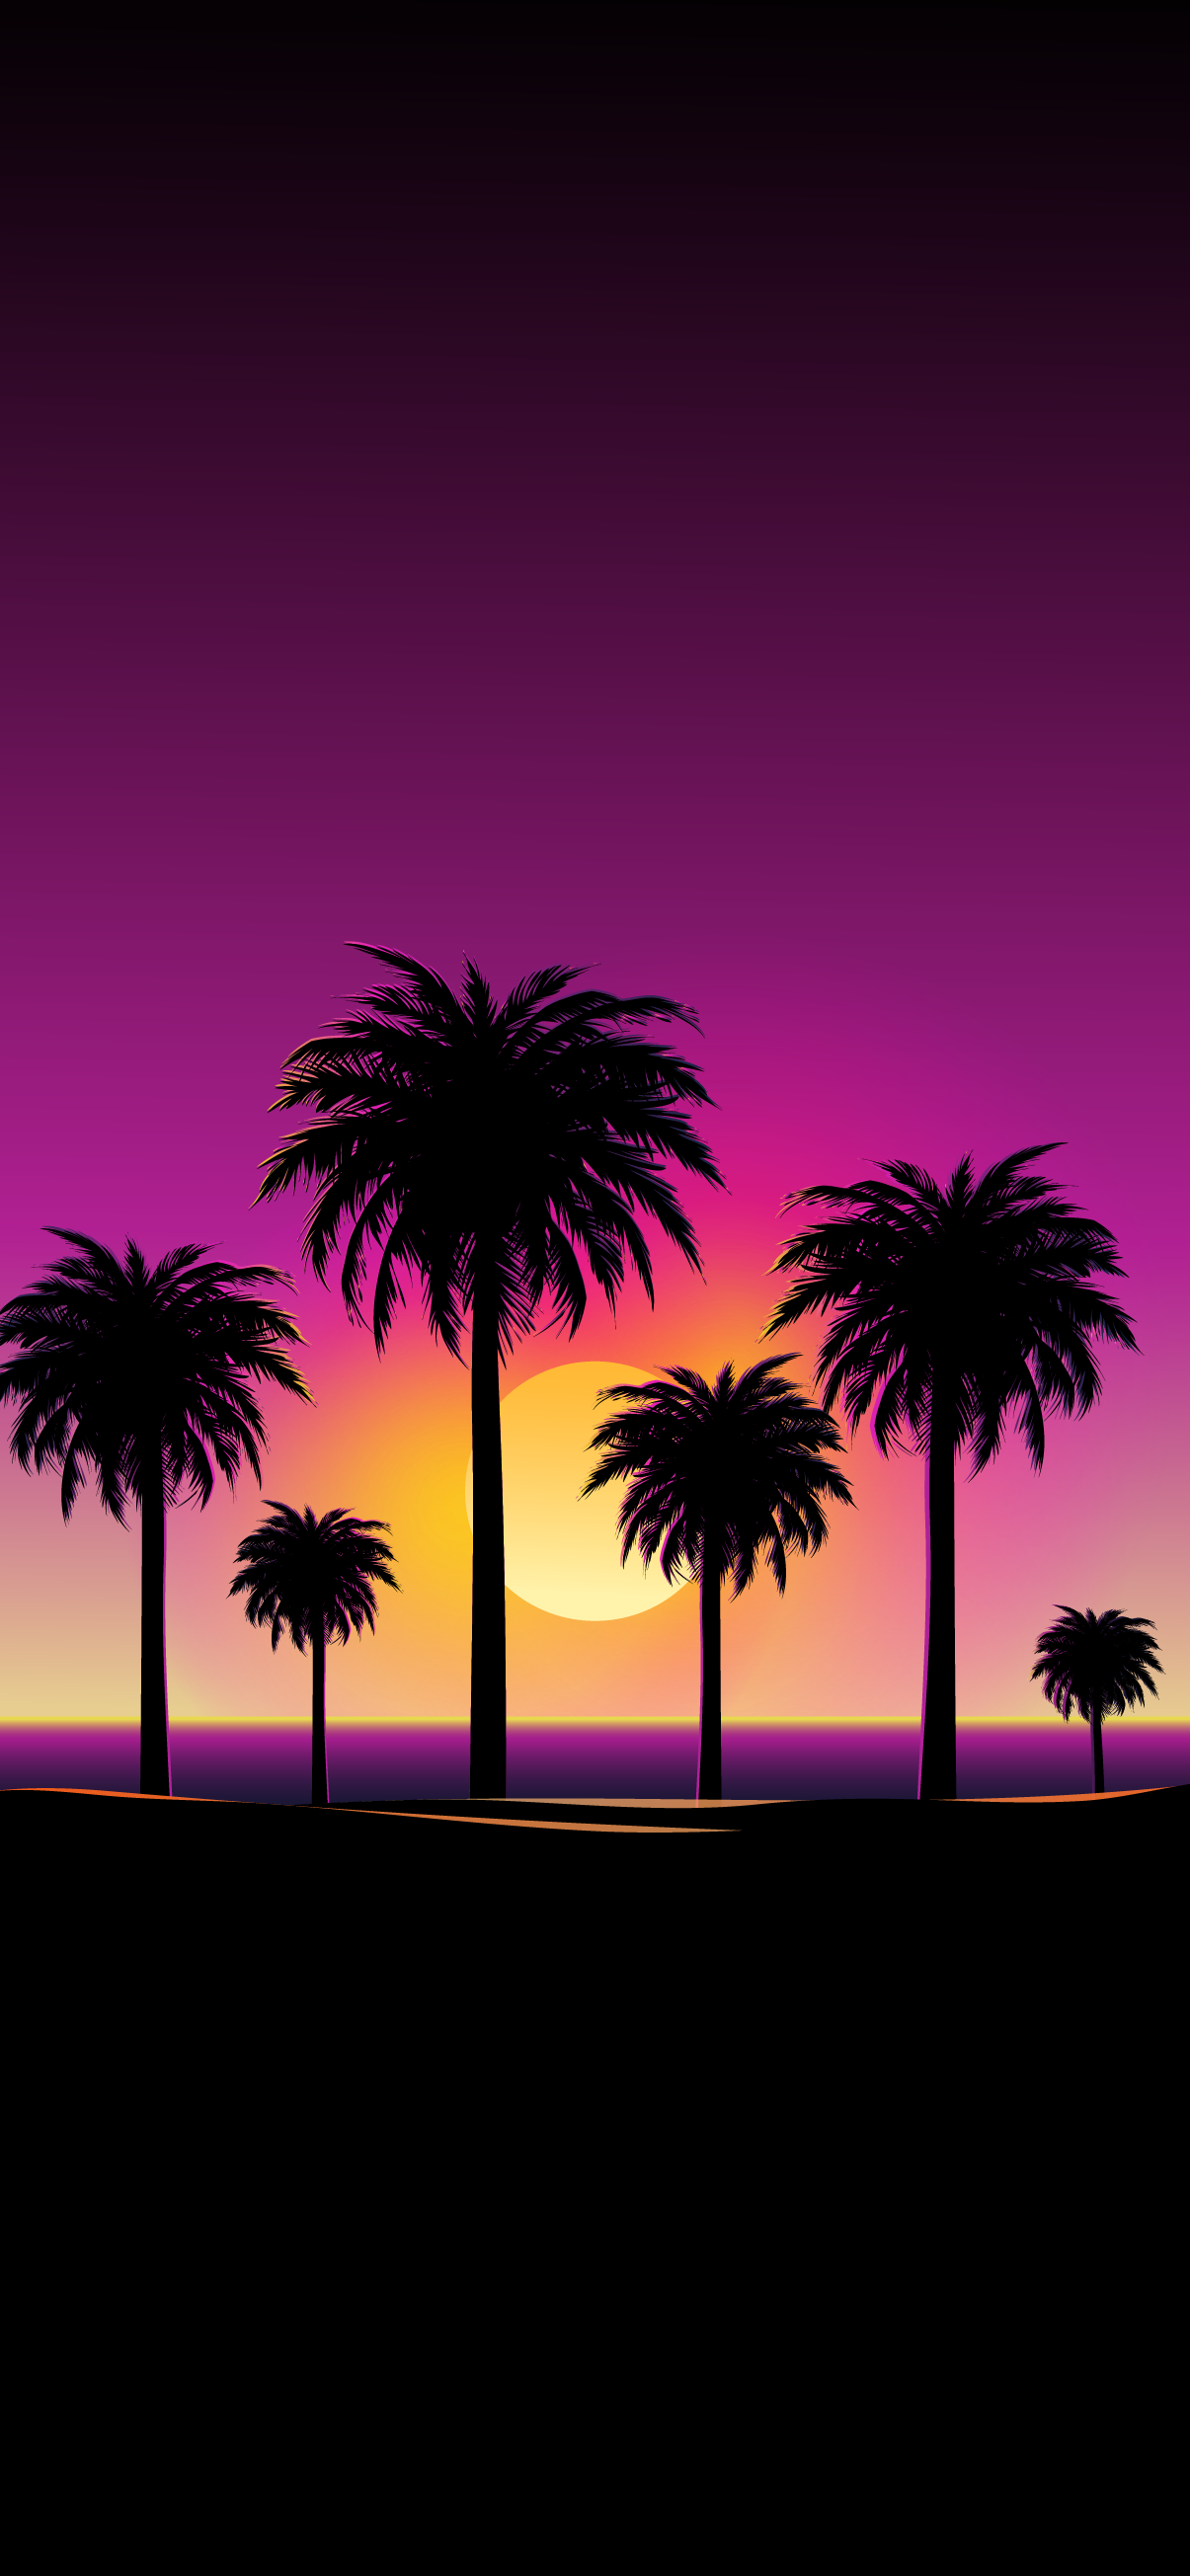 Phone wallpaper HD 4k Beach sunset with palm silhouettes. HeroScreen Wallpaper. iPhone wallpaper, Phone wallpaper, Summer wallpaper